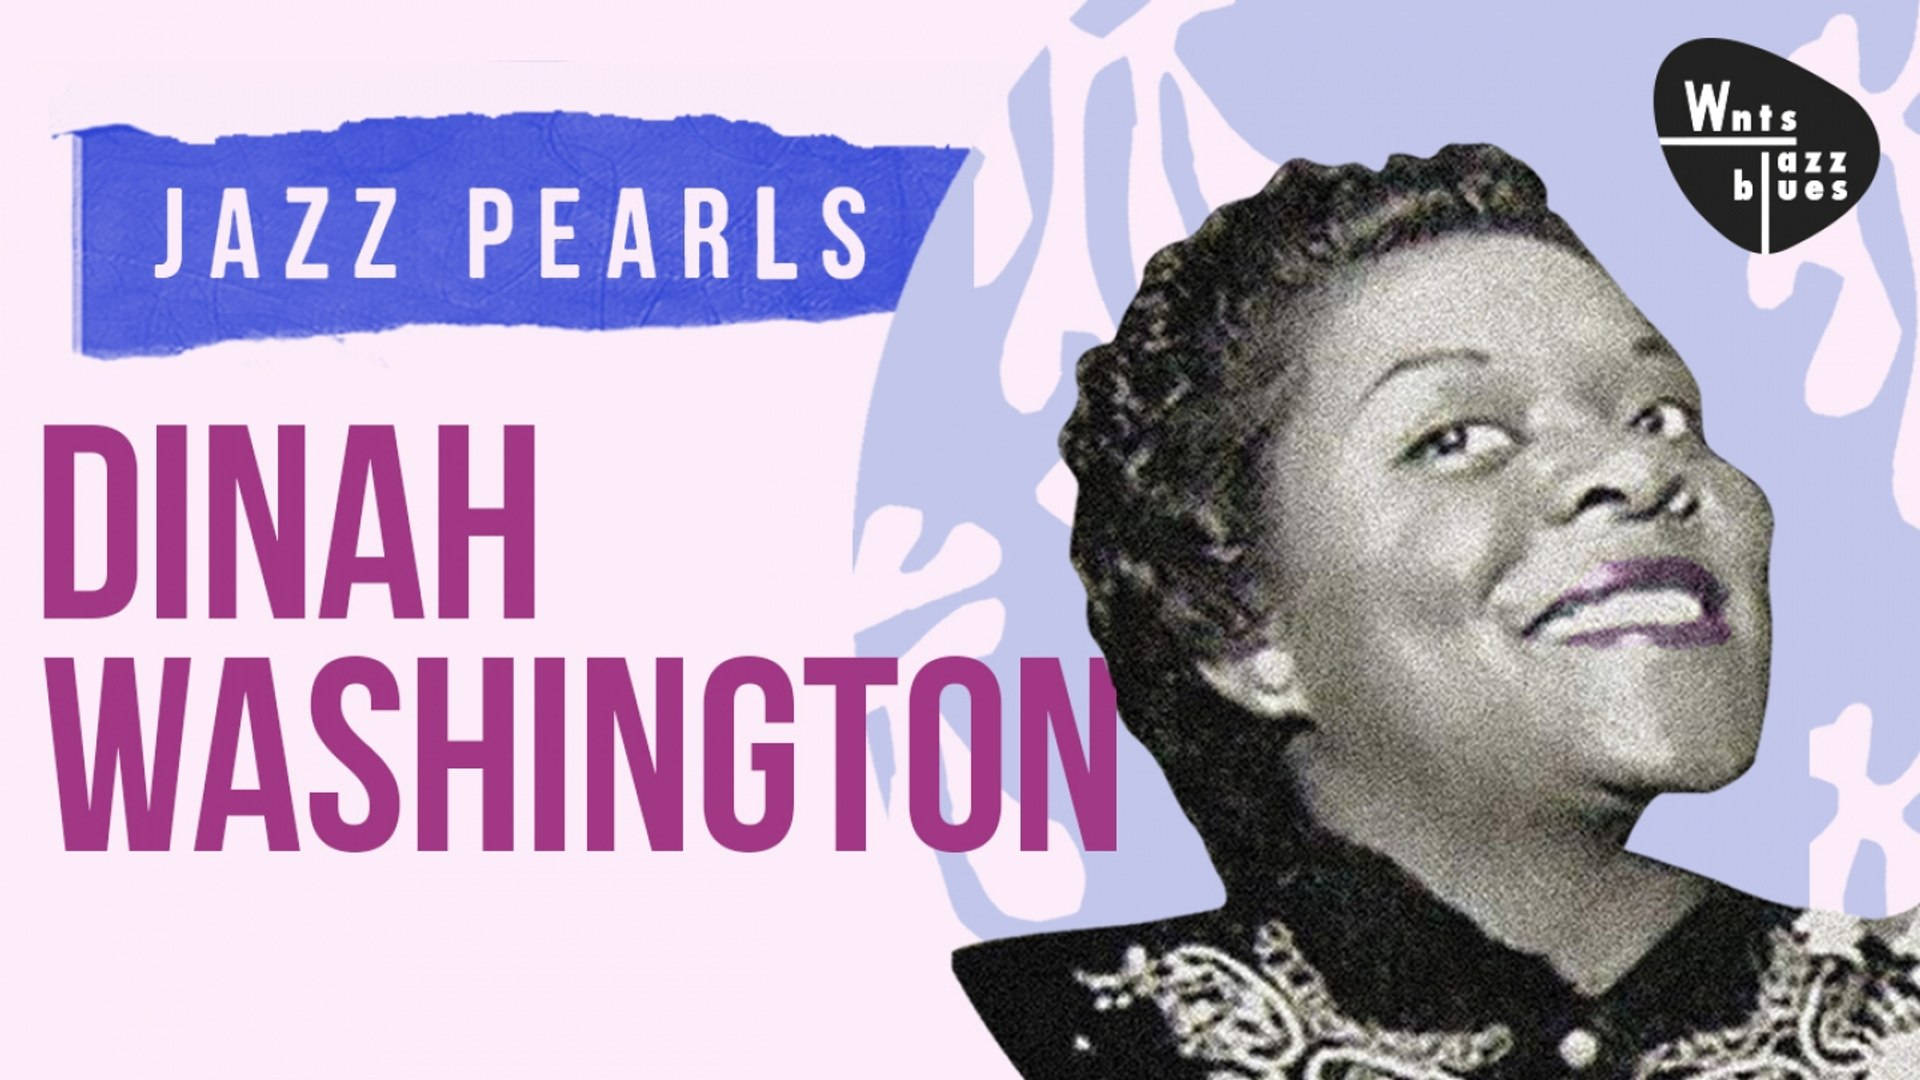 Jazz Pearls Dinah Washington Wallpaper